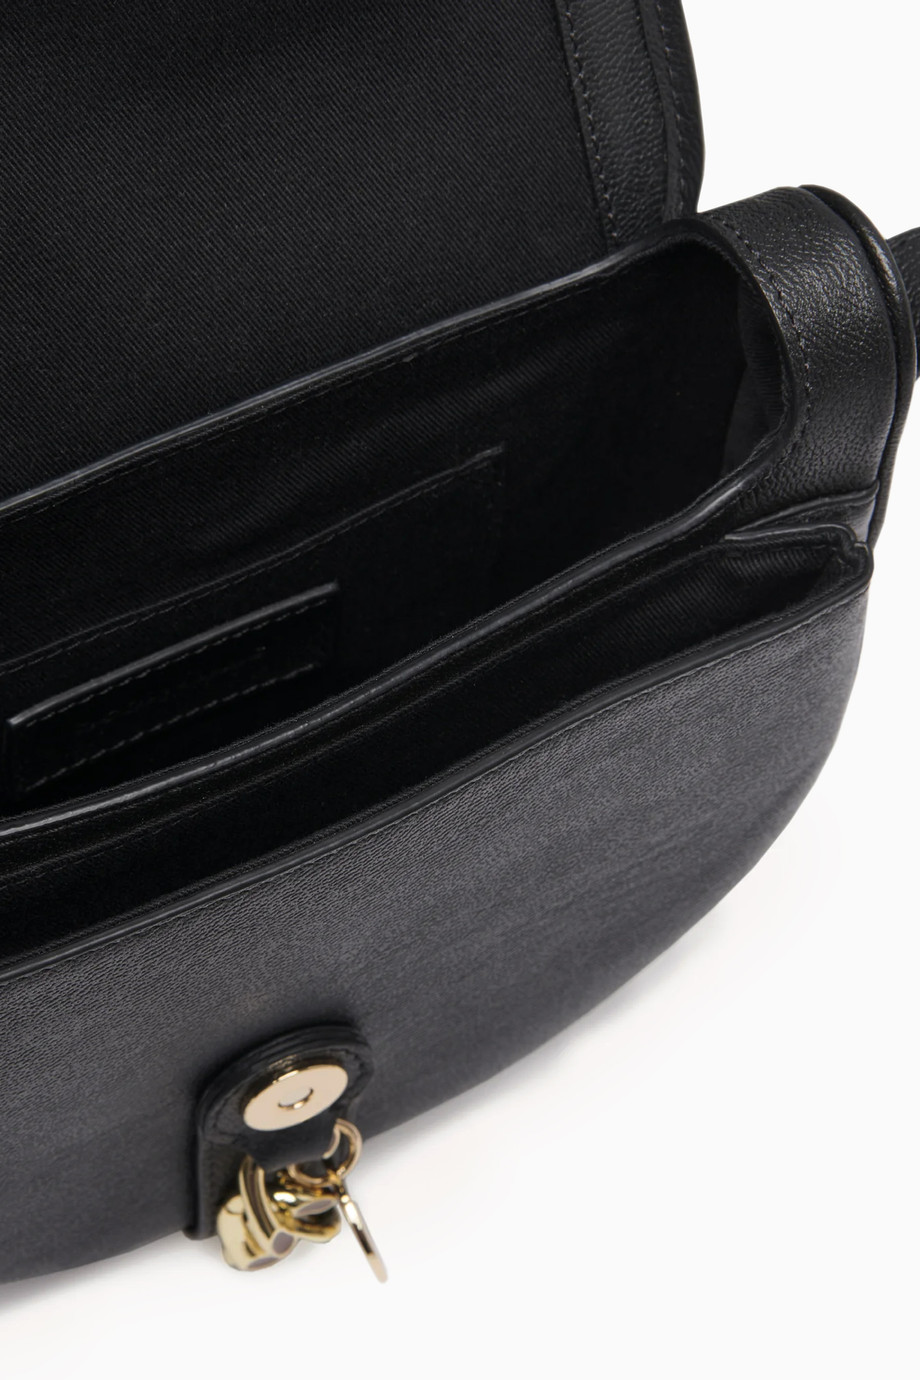 Shop See By Chloé Black Mara Leather Cross-Body Bag for Women | Ounass UAE